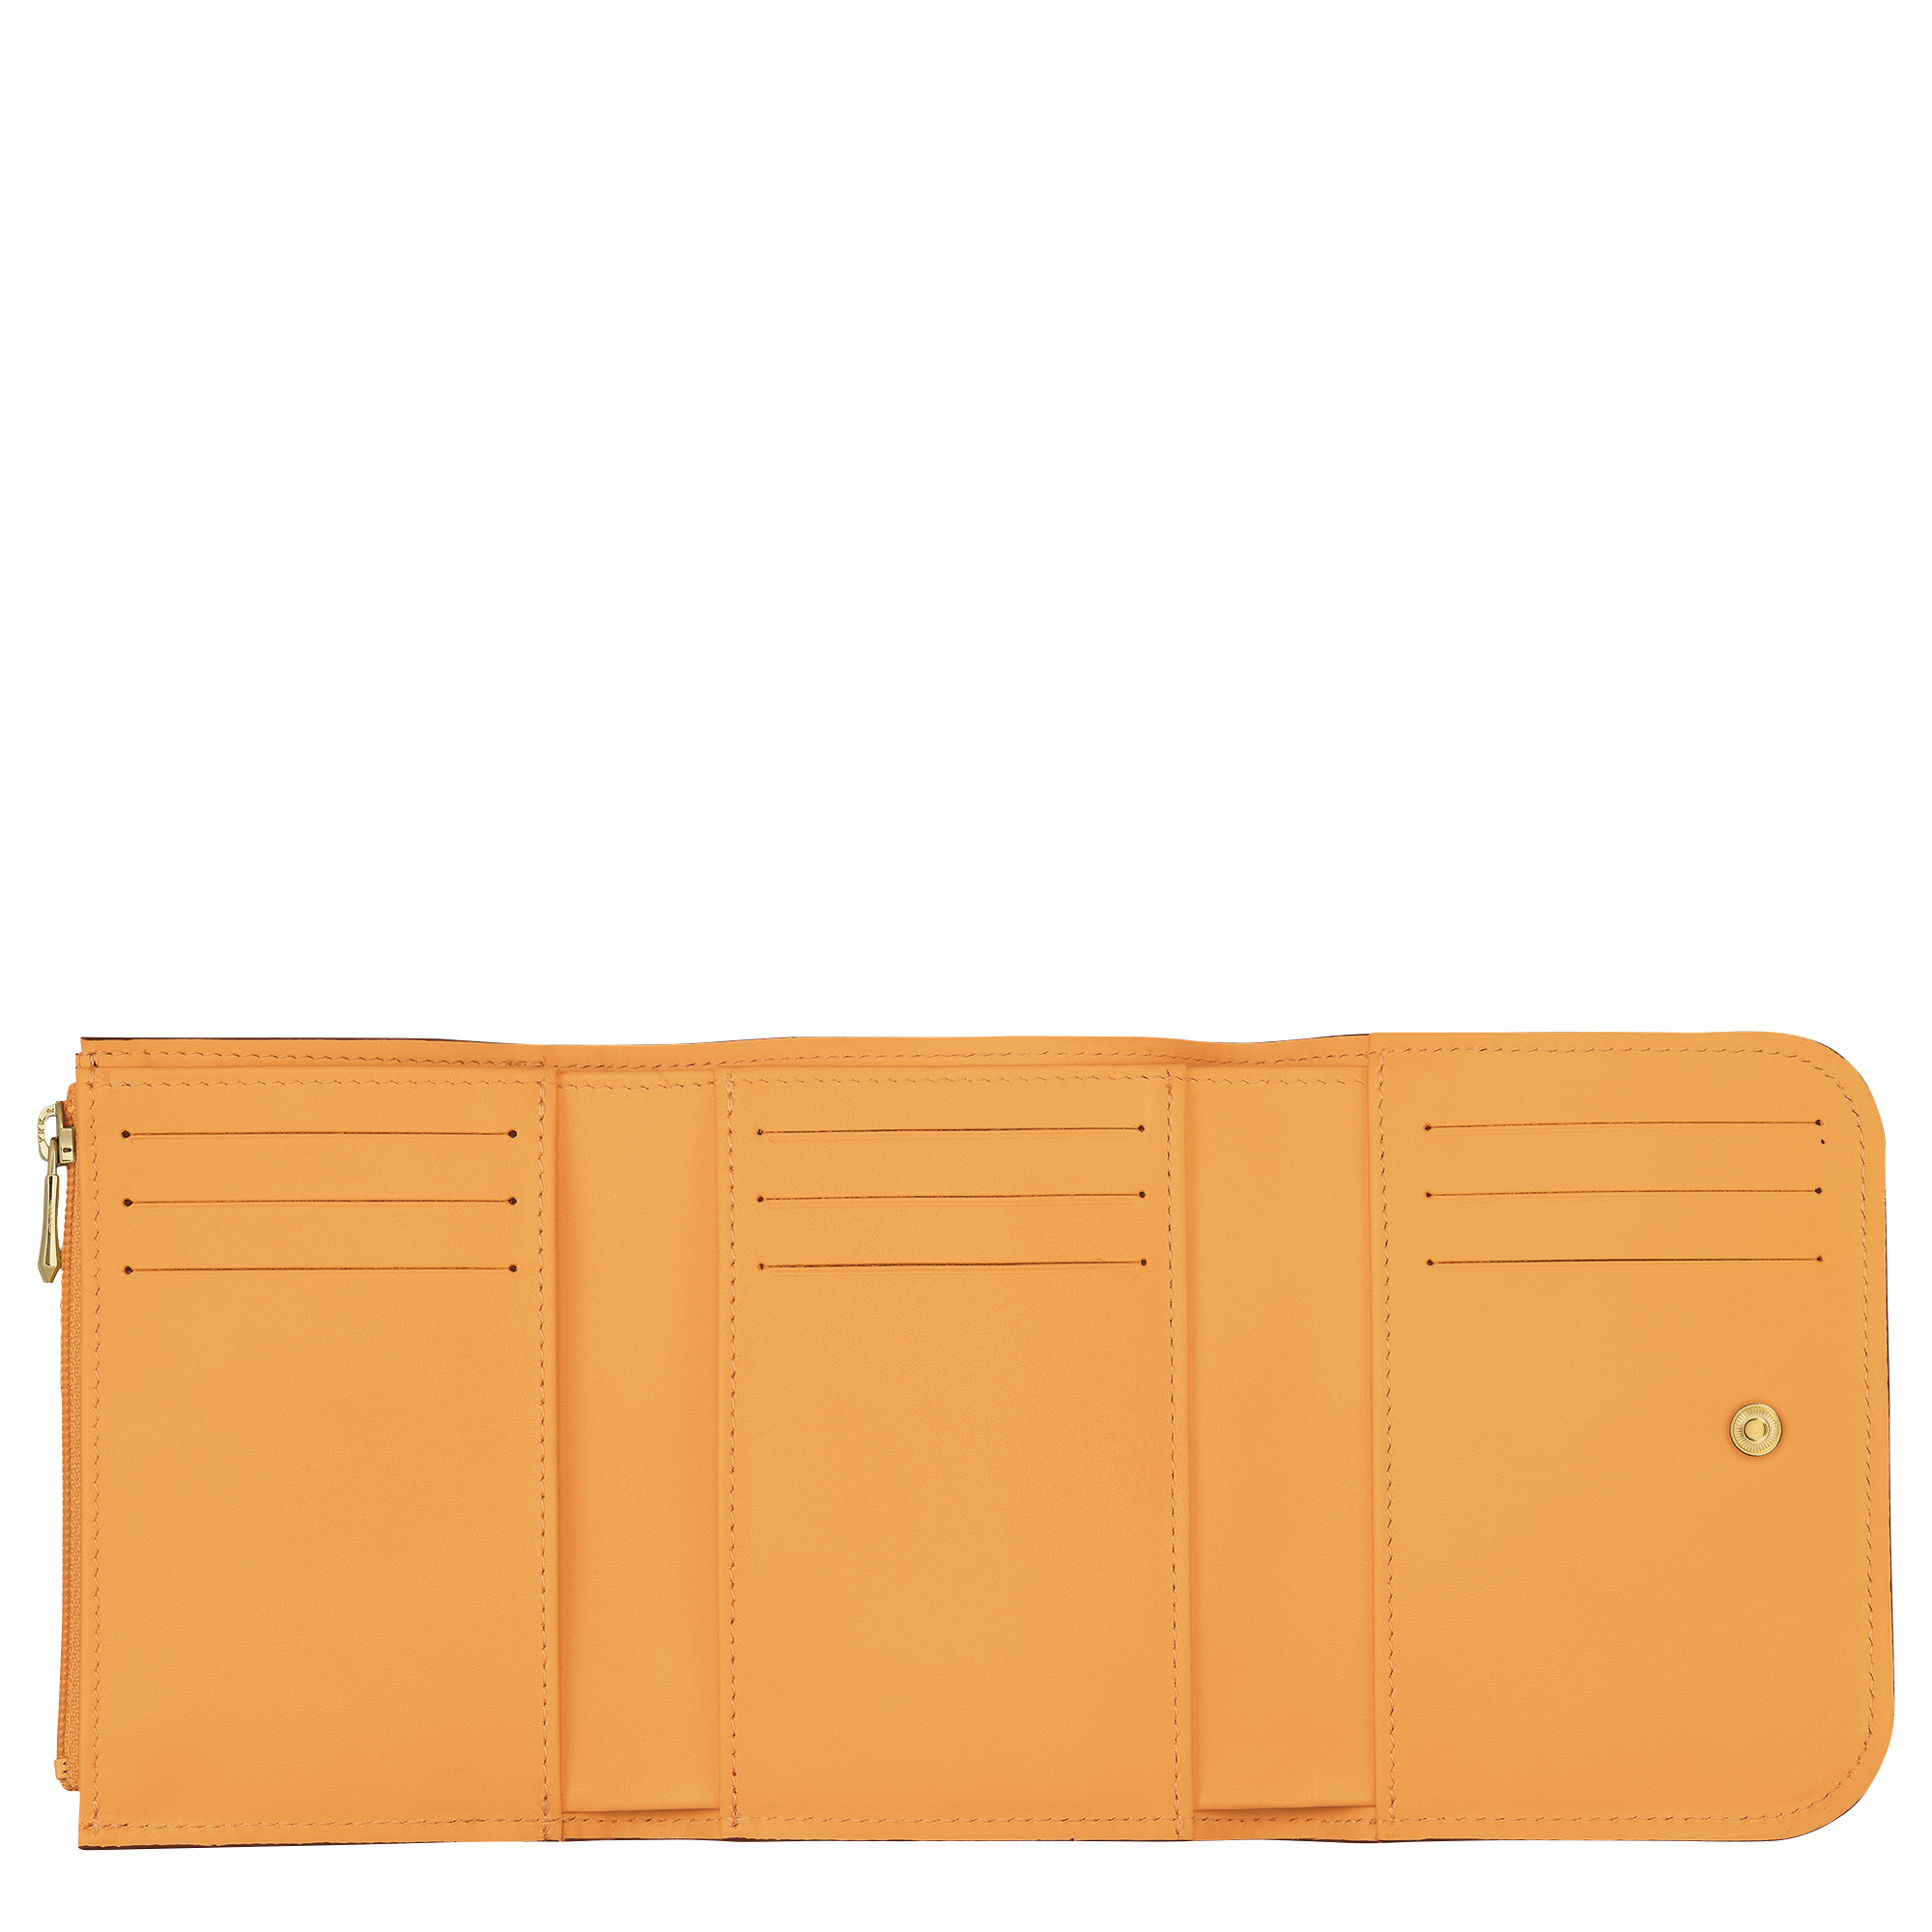 Box-Trot 小型錢包, 杏色